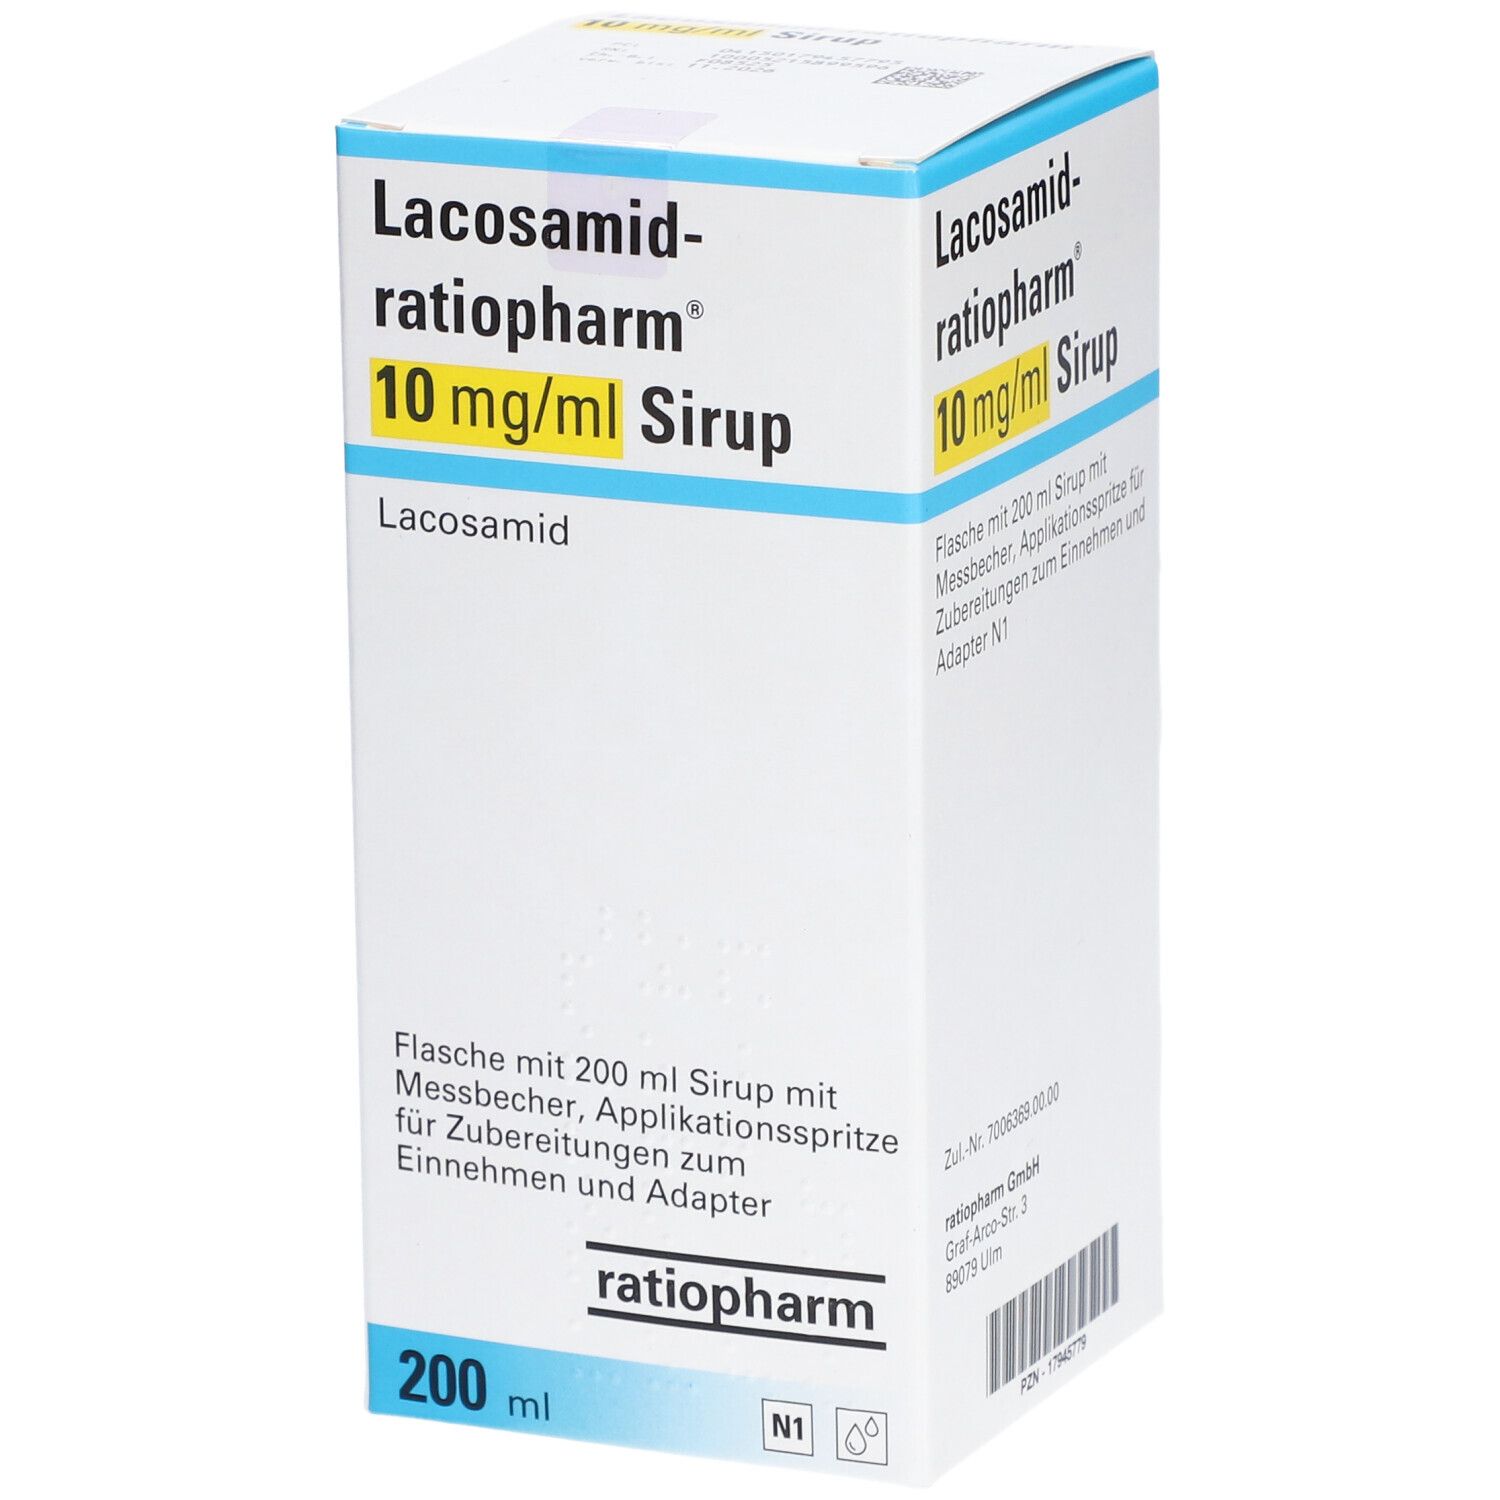 Lacosamid-ratiopharm® 10 mg/ml